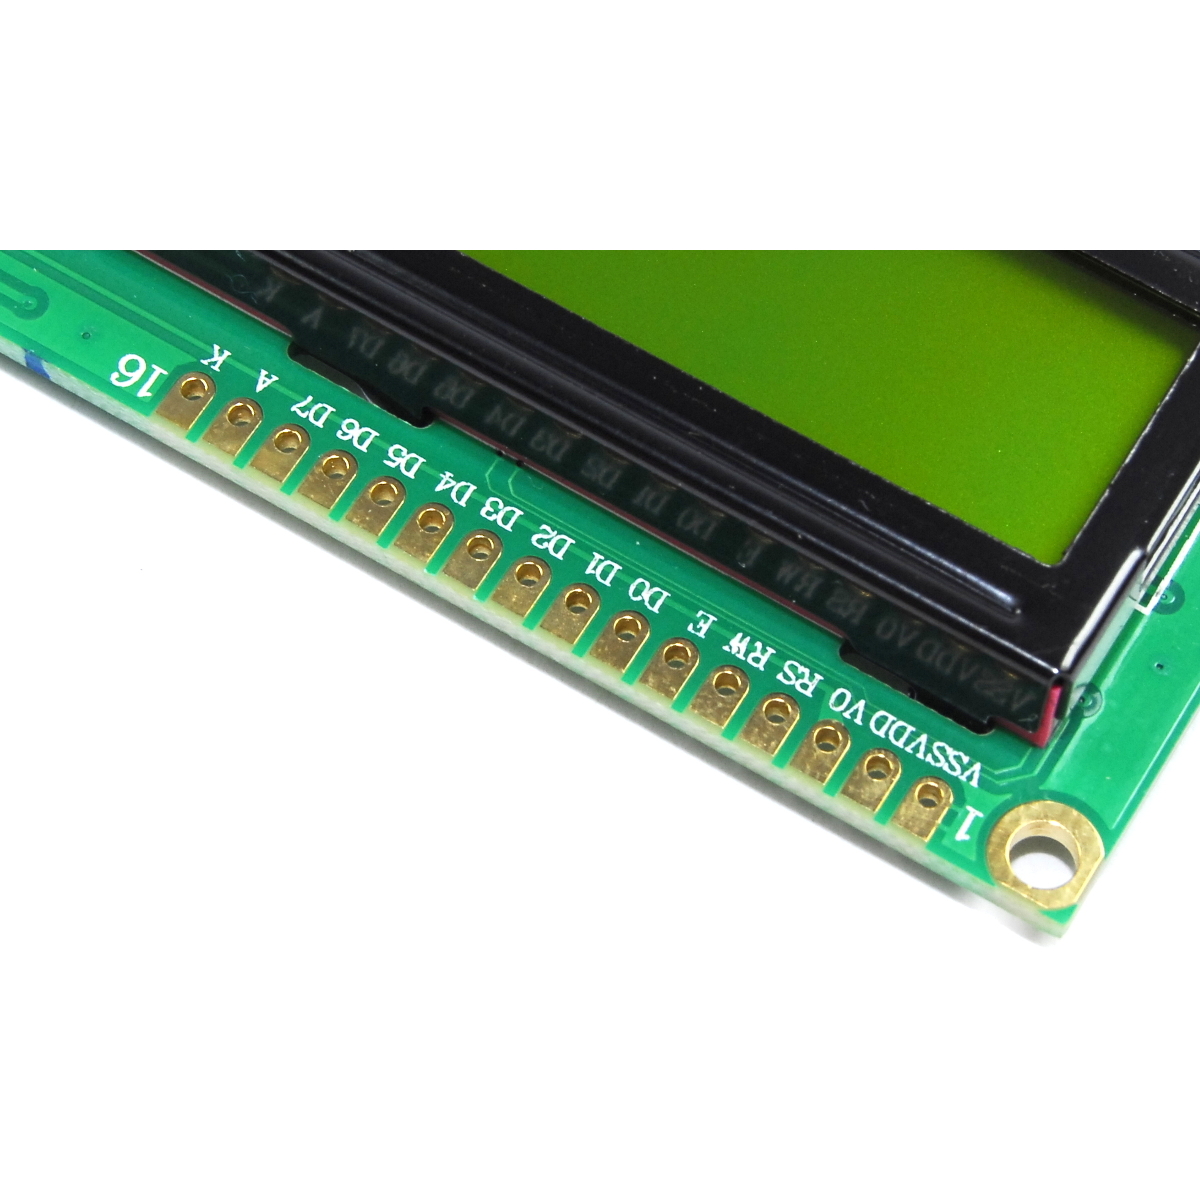 16x2 Green LCD Display Image 2